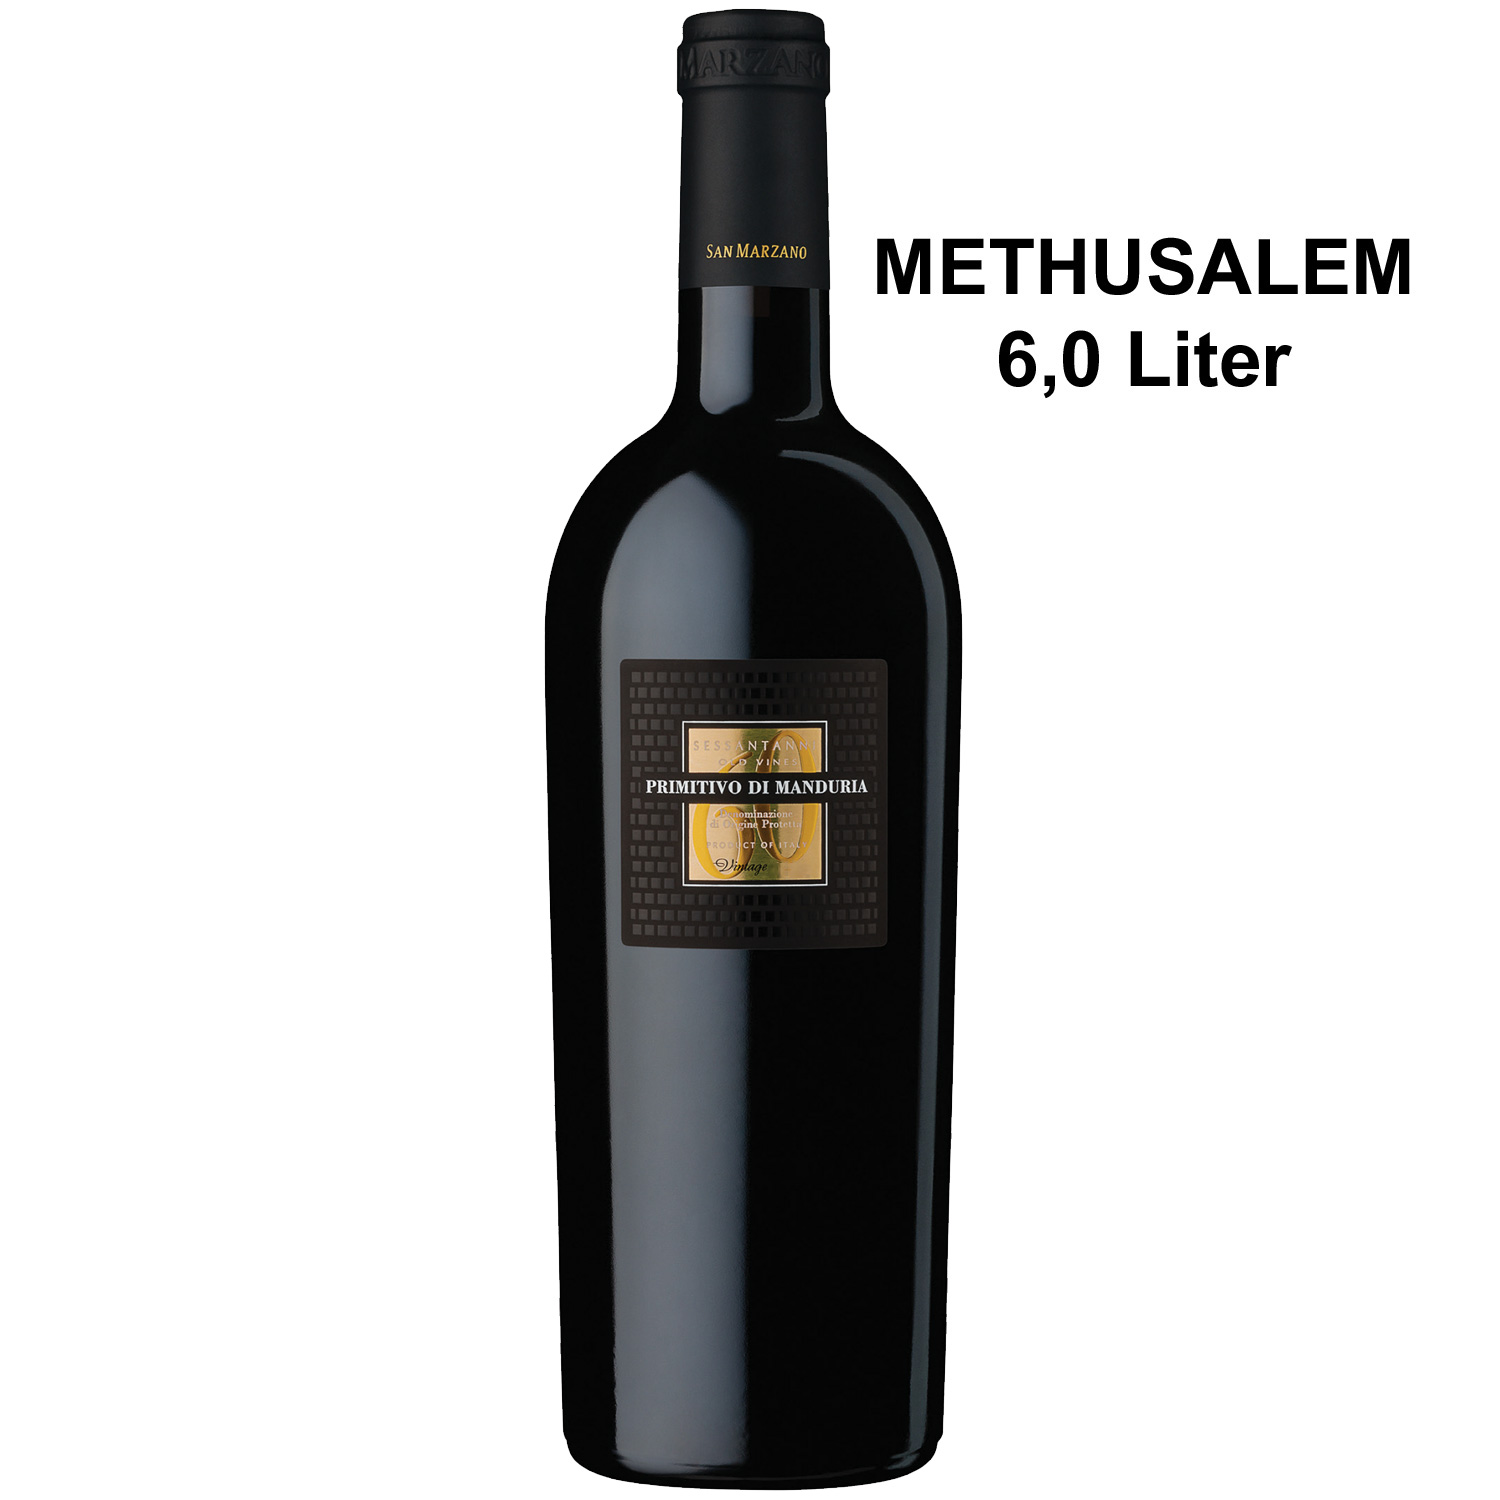 Italienischer Rotwein Methusalem Flasche Sessantanni Old Vines Primitivo di Manduria